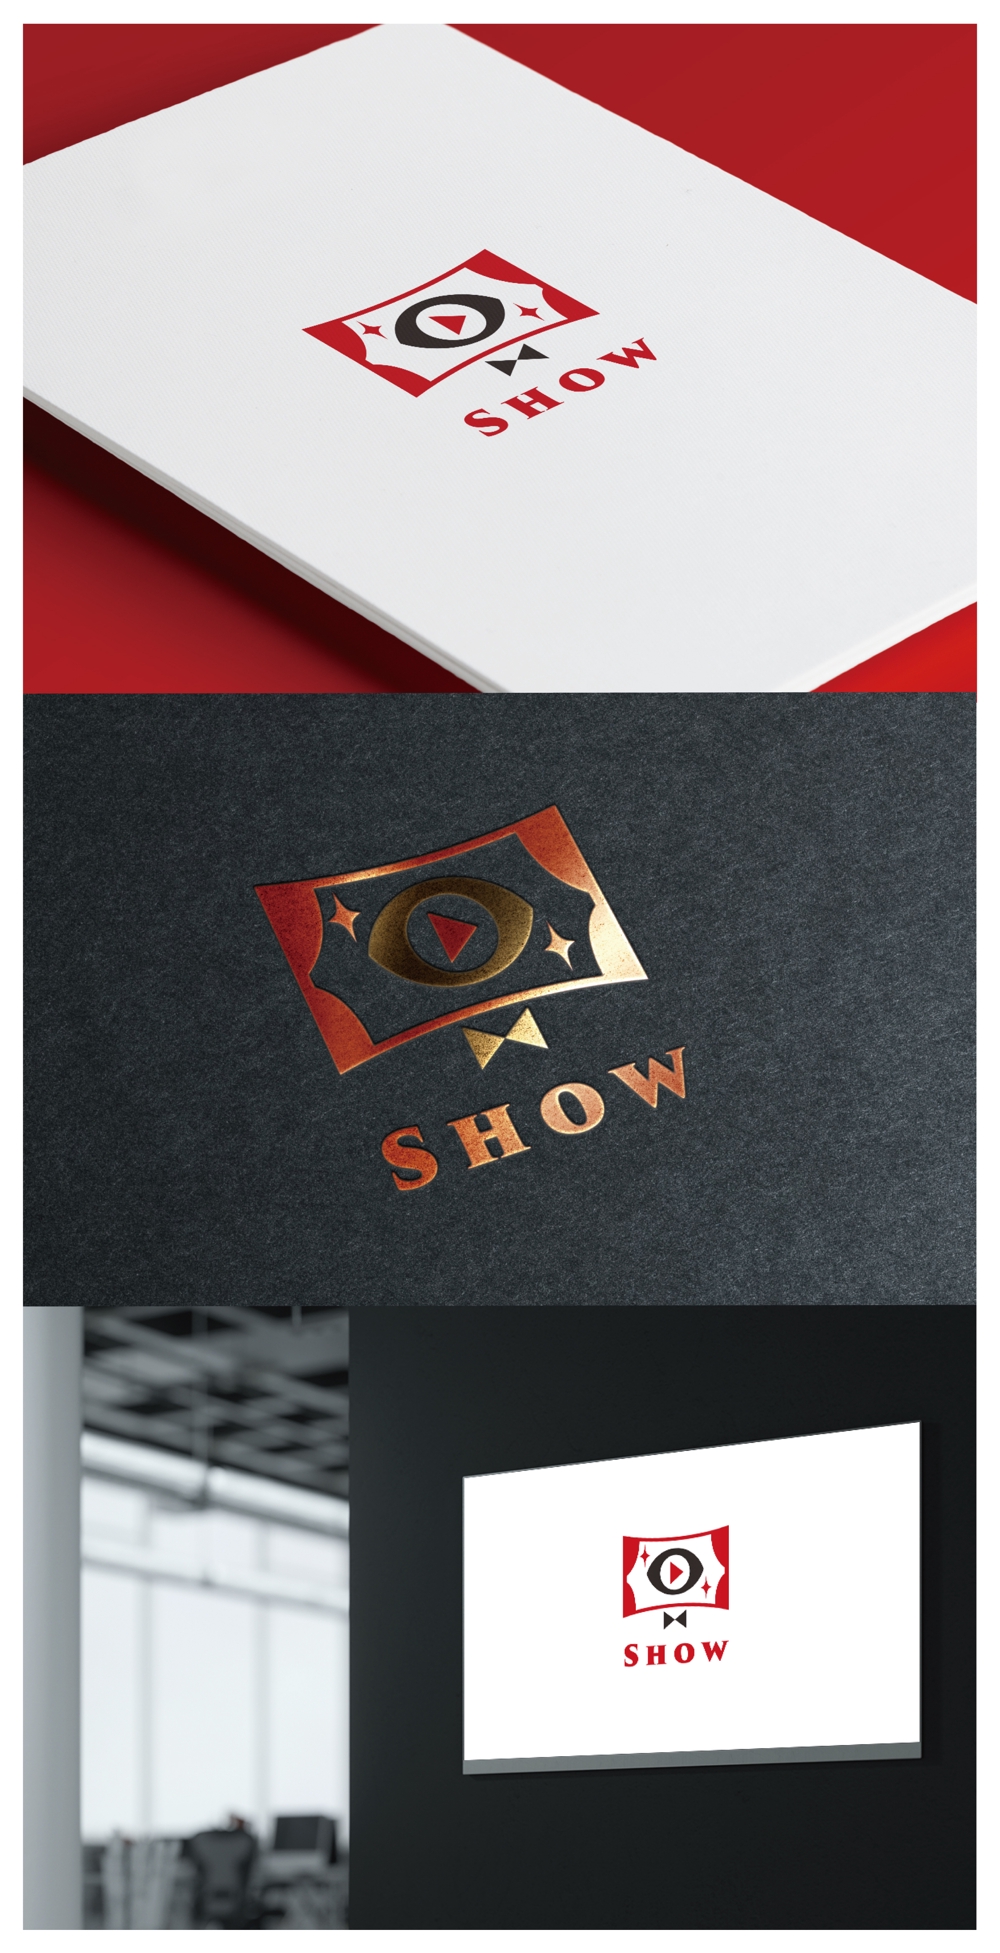 Show_logo04_01.jpg